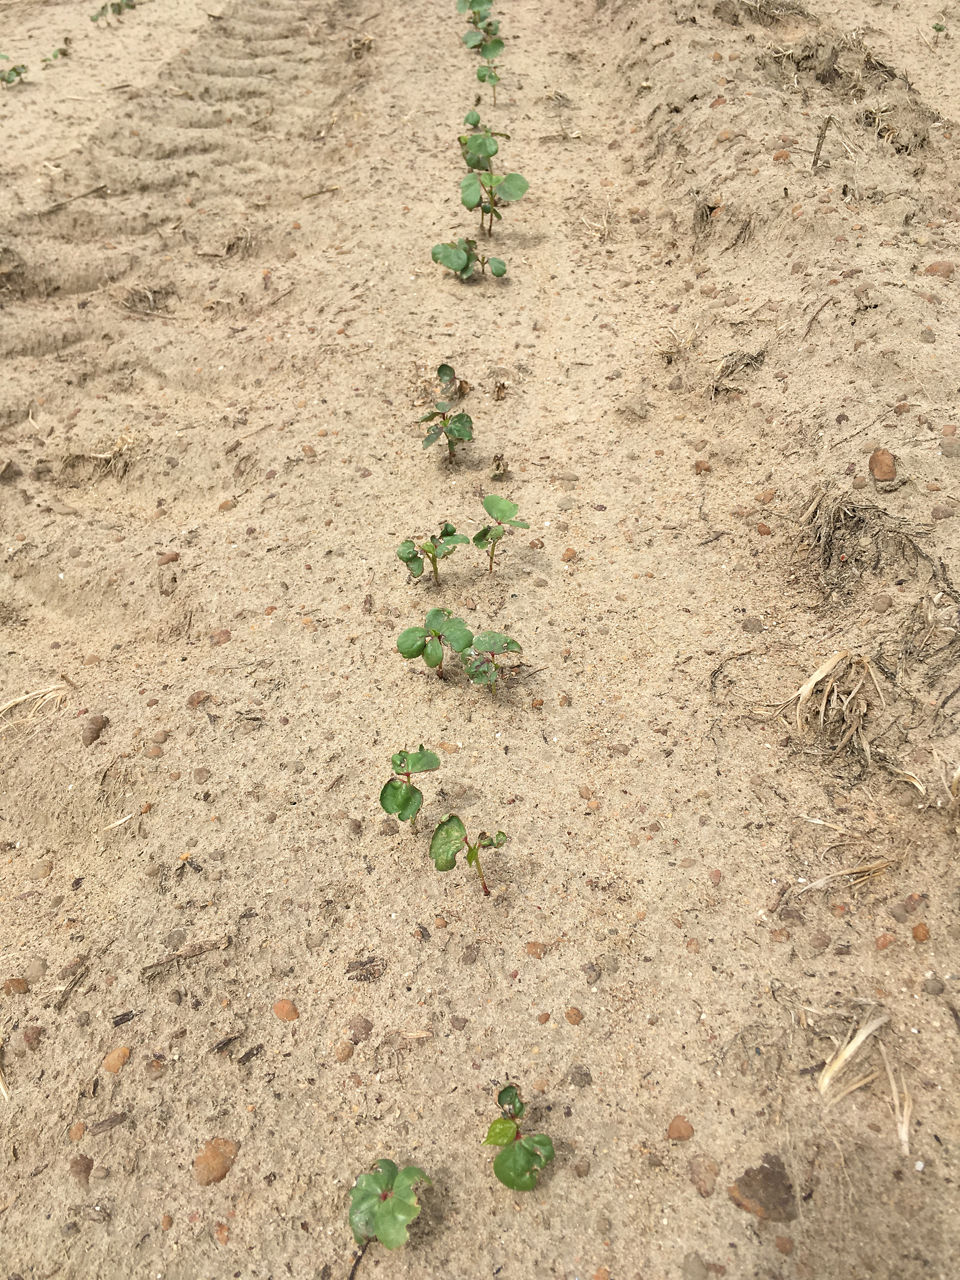 Figure 1. Cotton seedlings emerging.